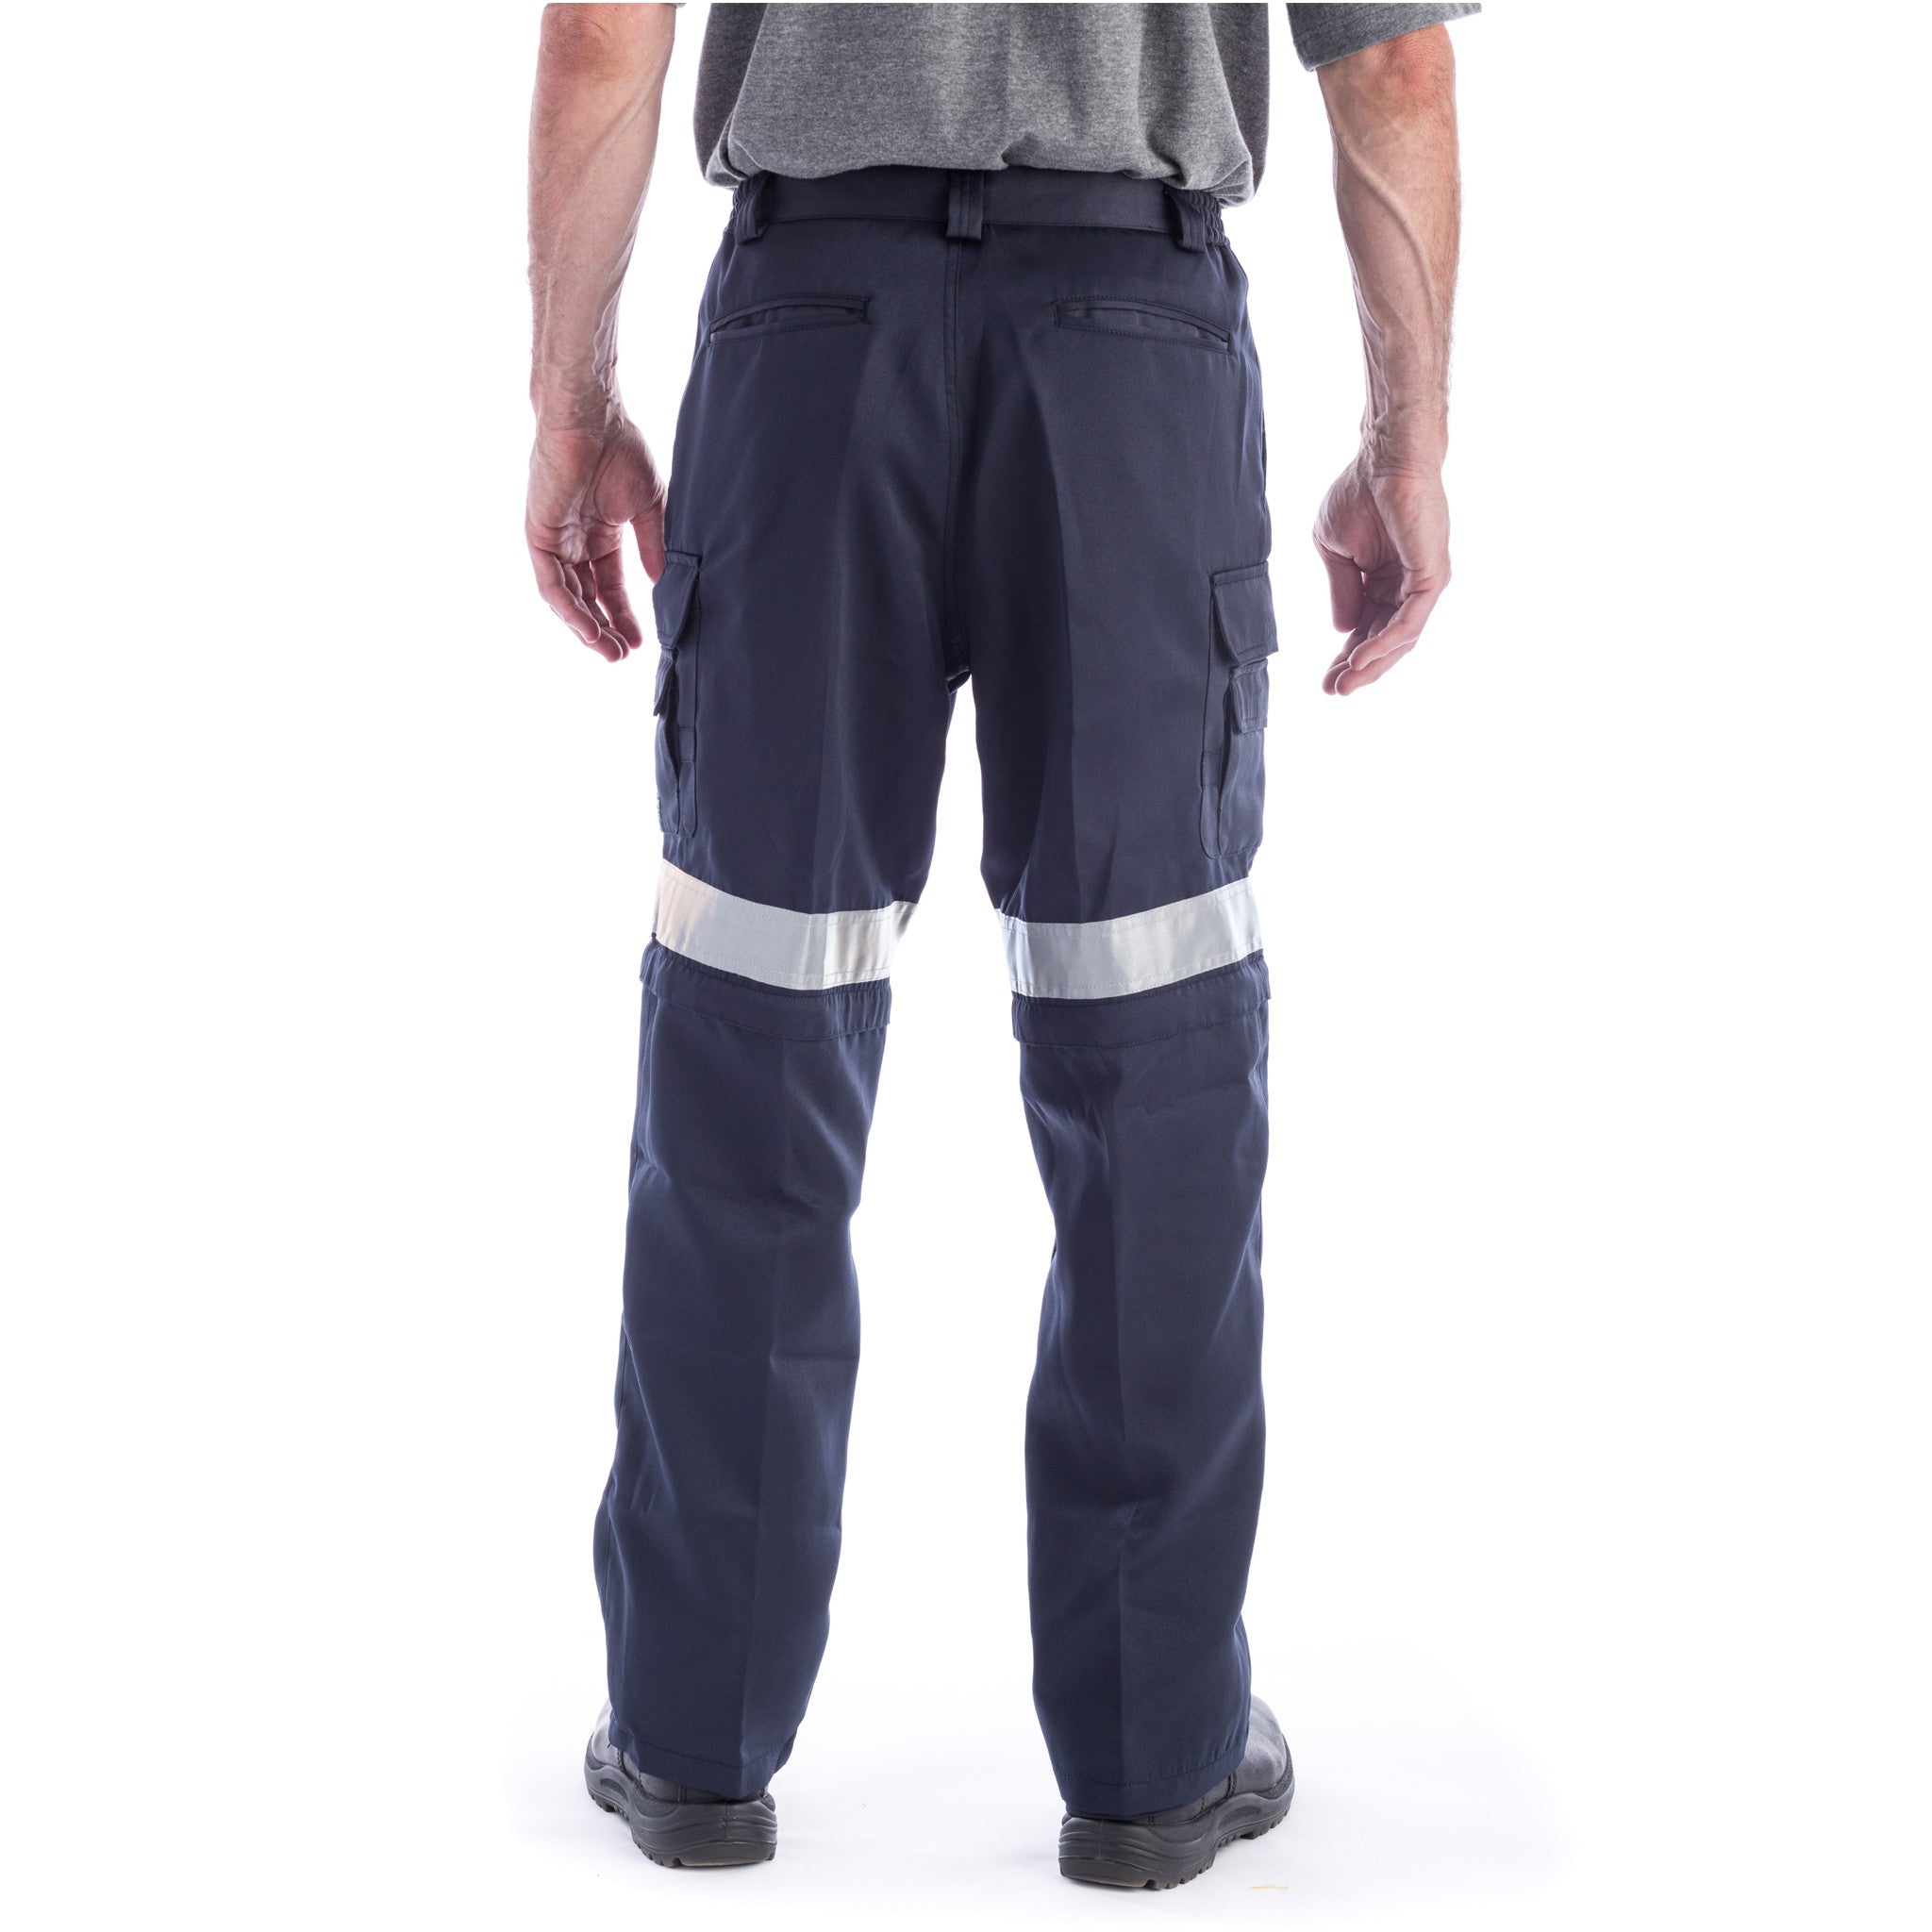 CoolWorks Hi-Vis Men's Ventilated Cargo Work Pants